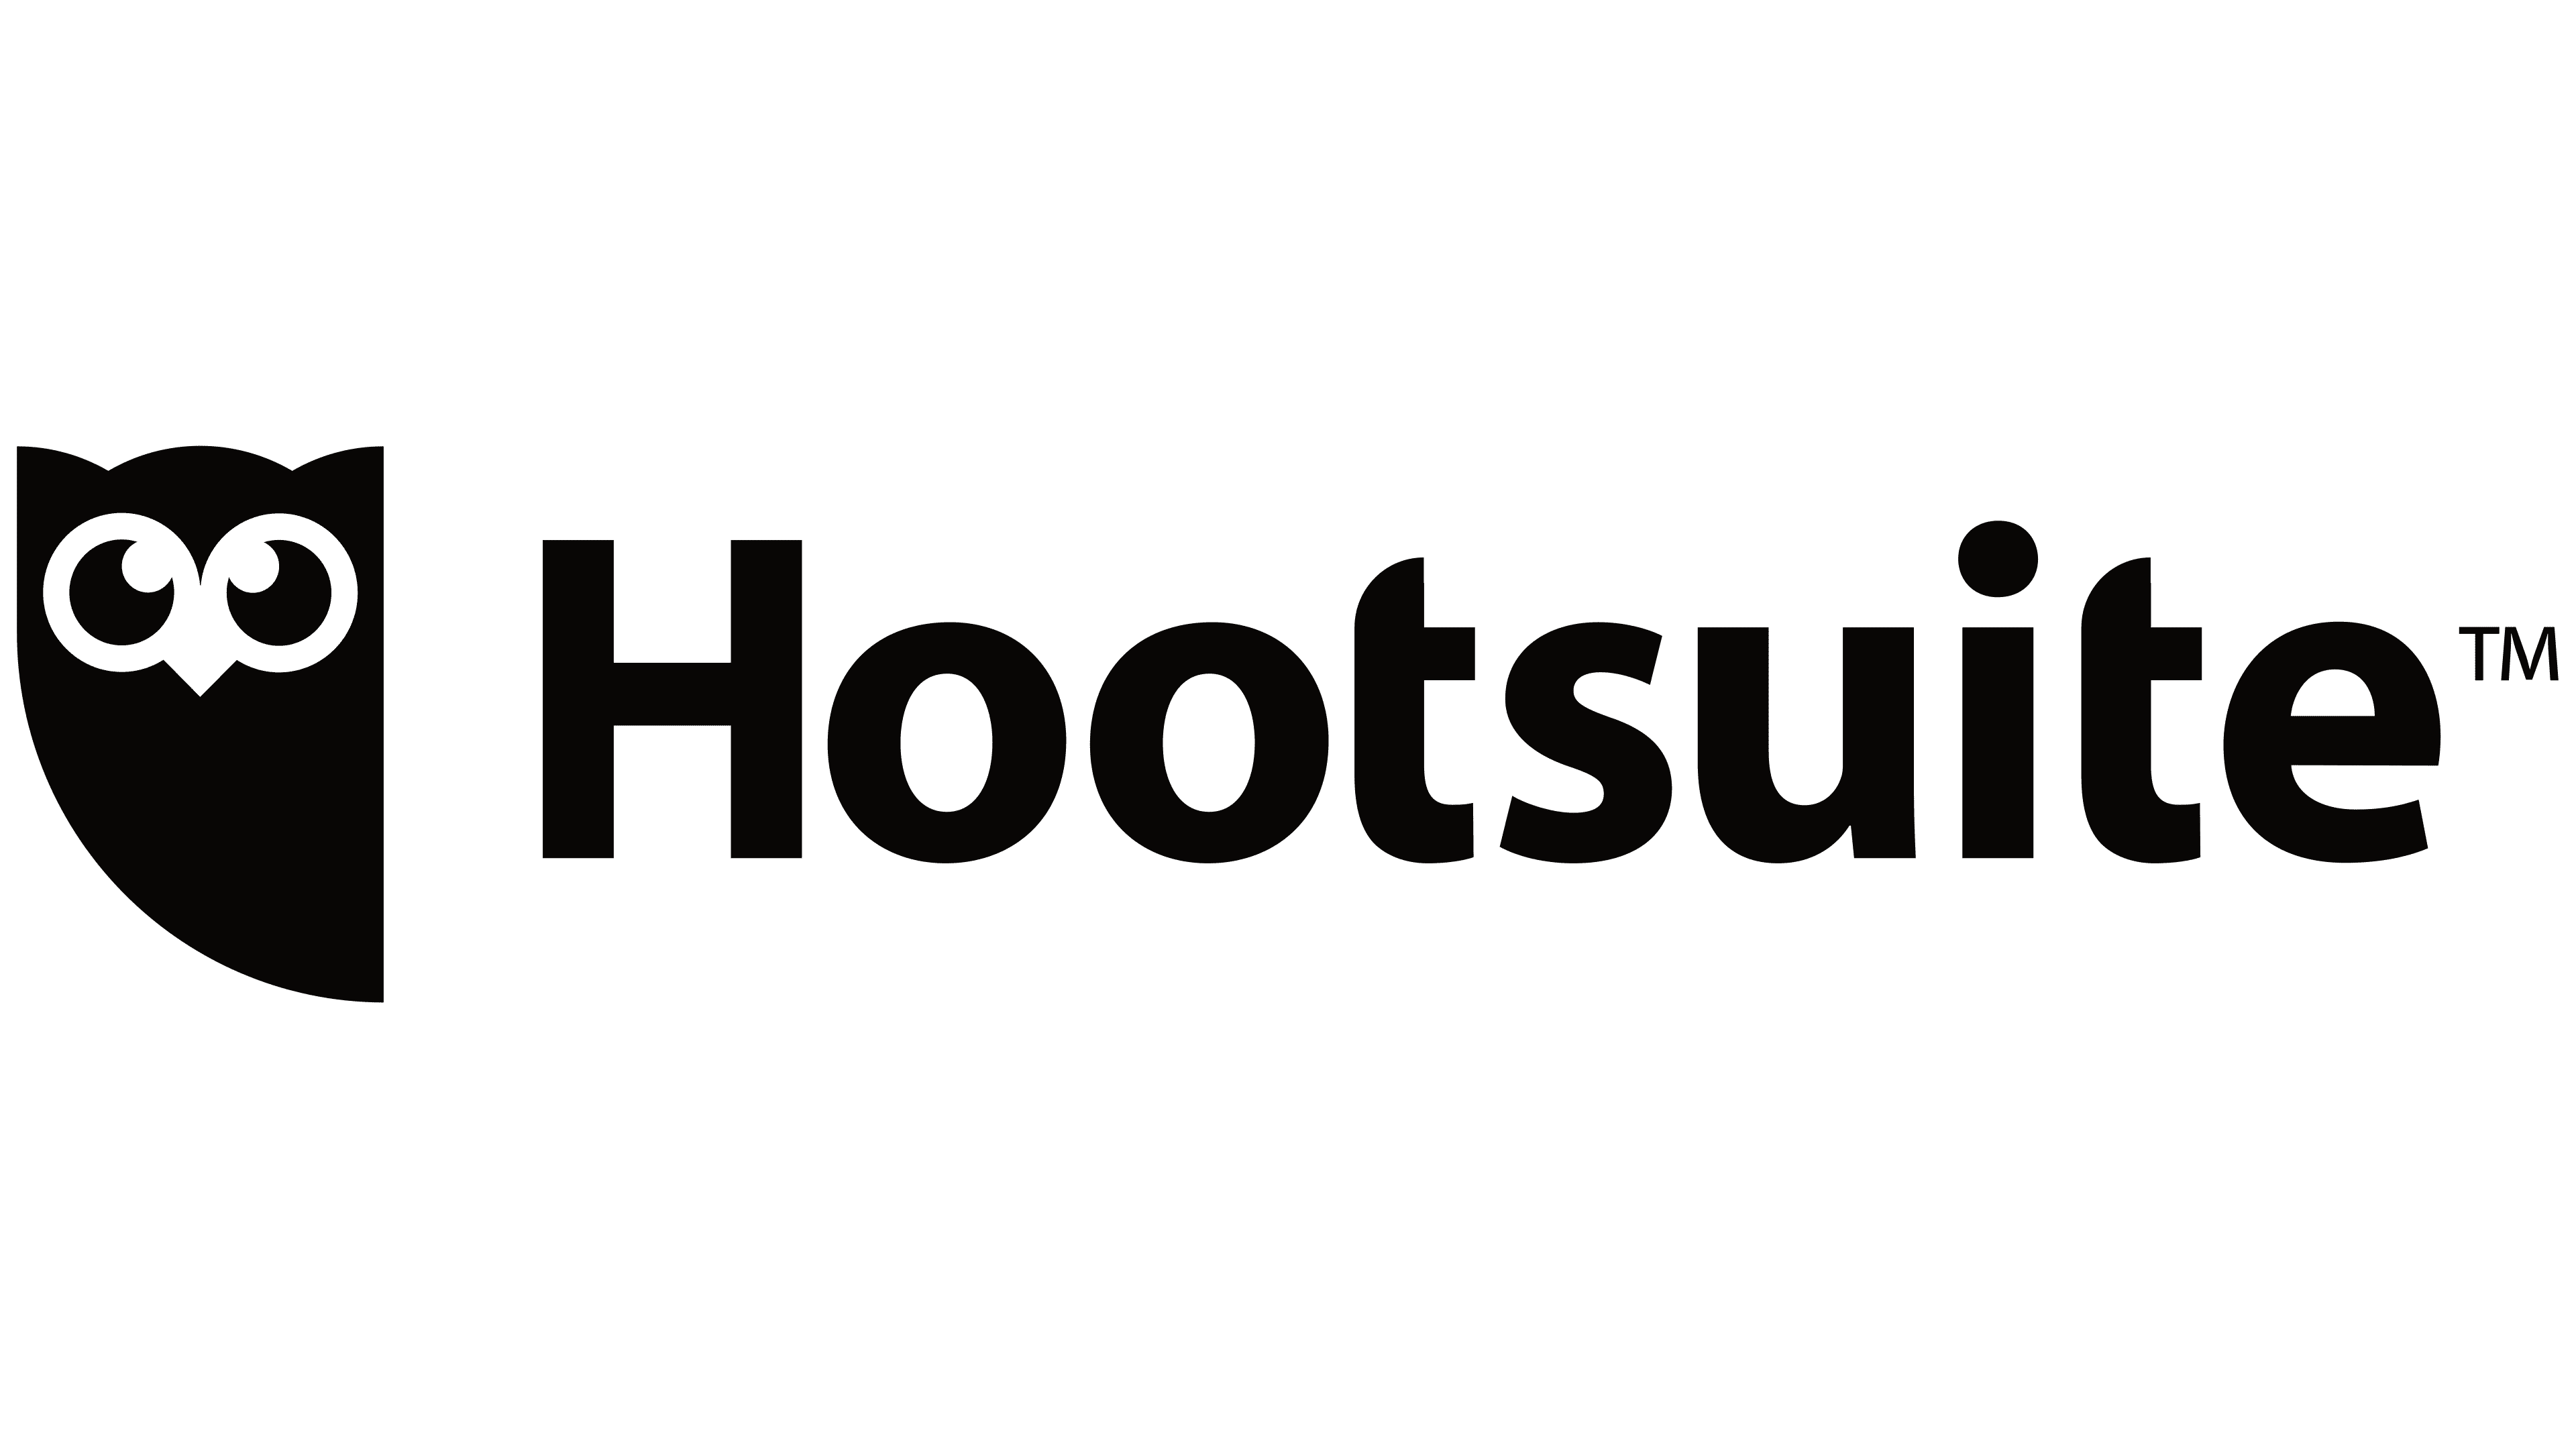 Hootsuite Logo 2014 Present